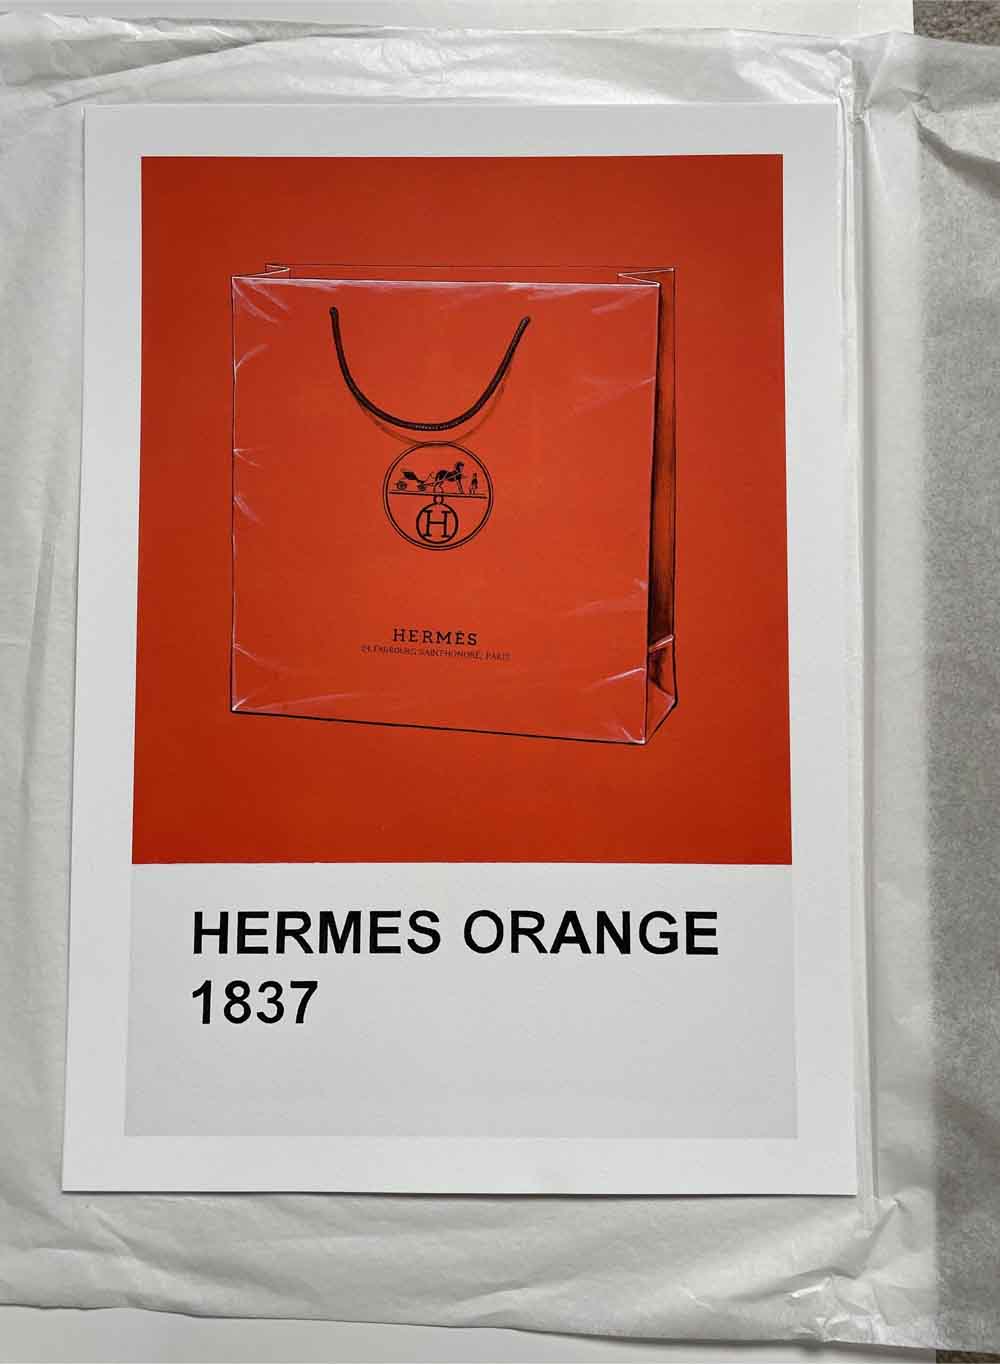 Hermés Orange Enlarged